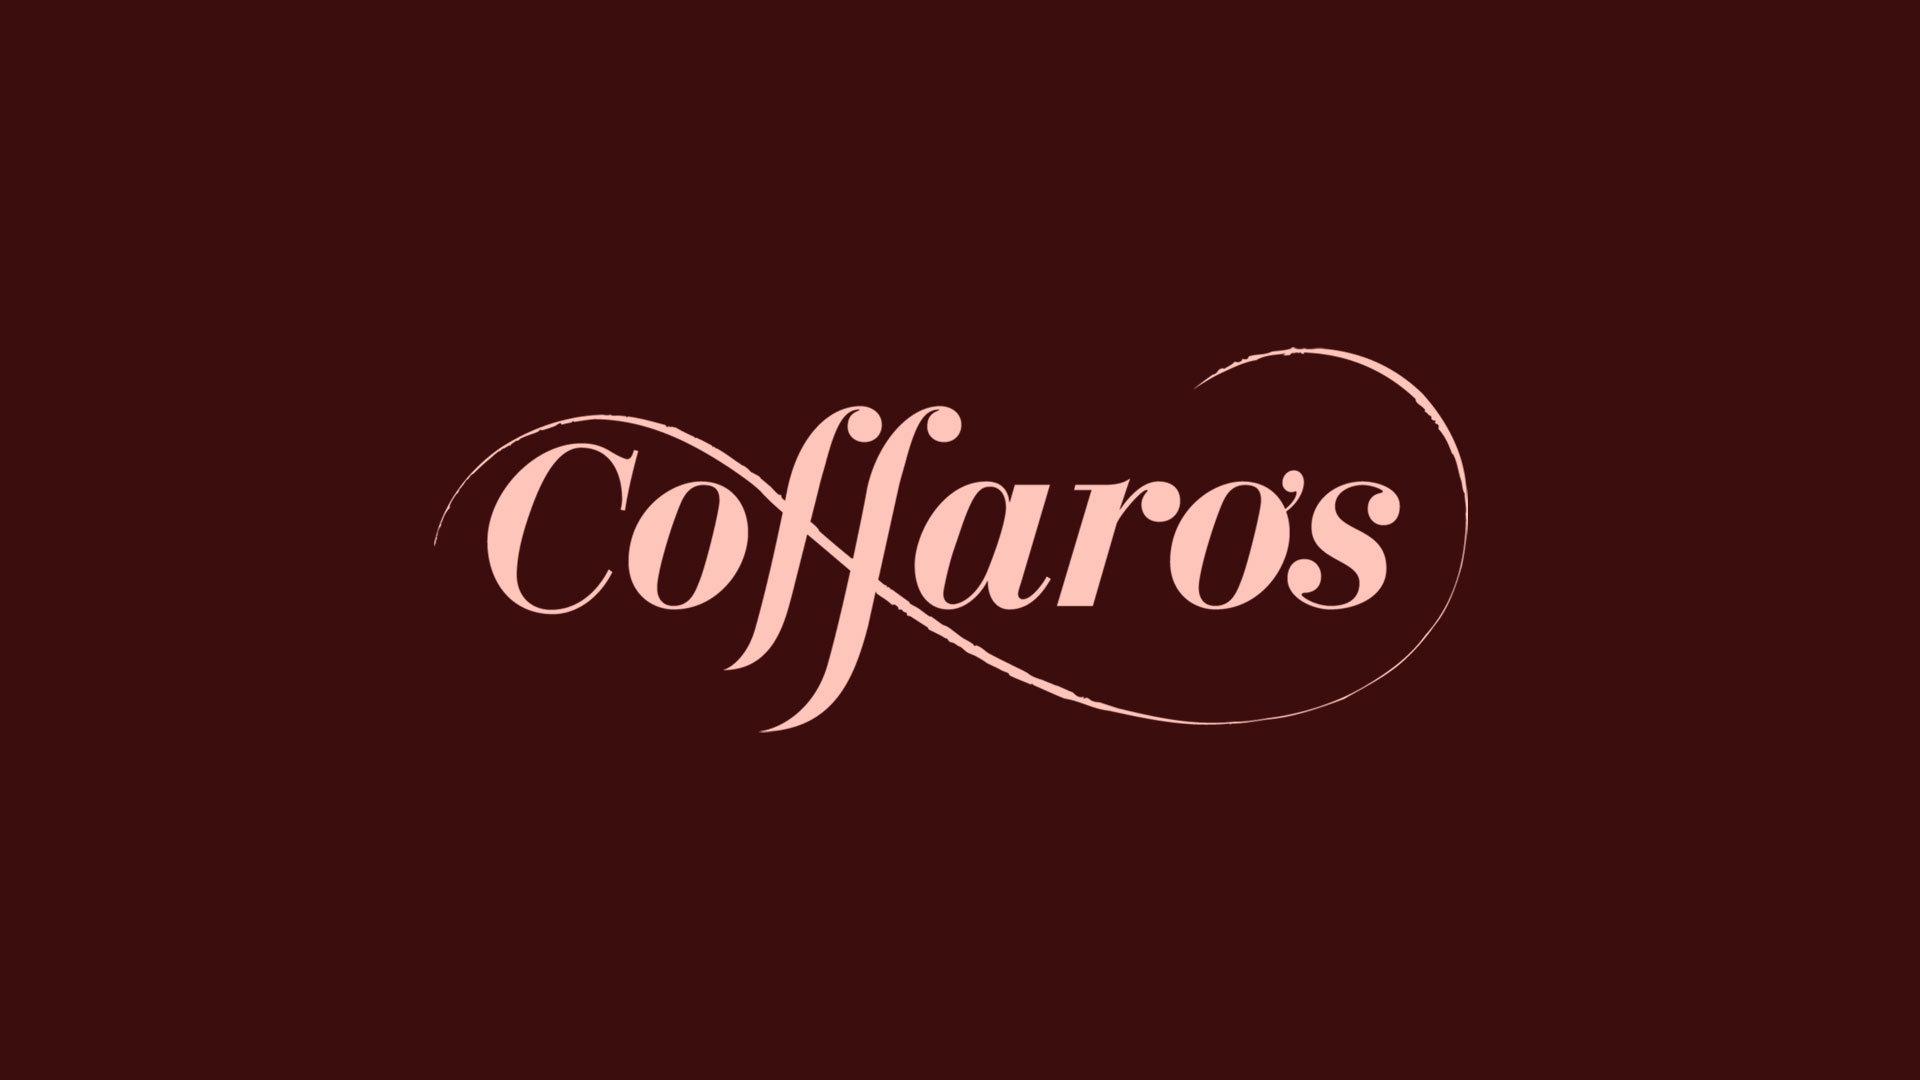 Coffaros-Bakery-Logo-K-1920x1080